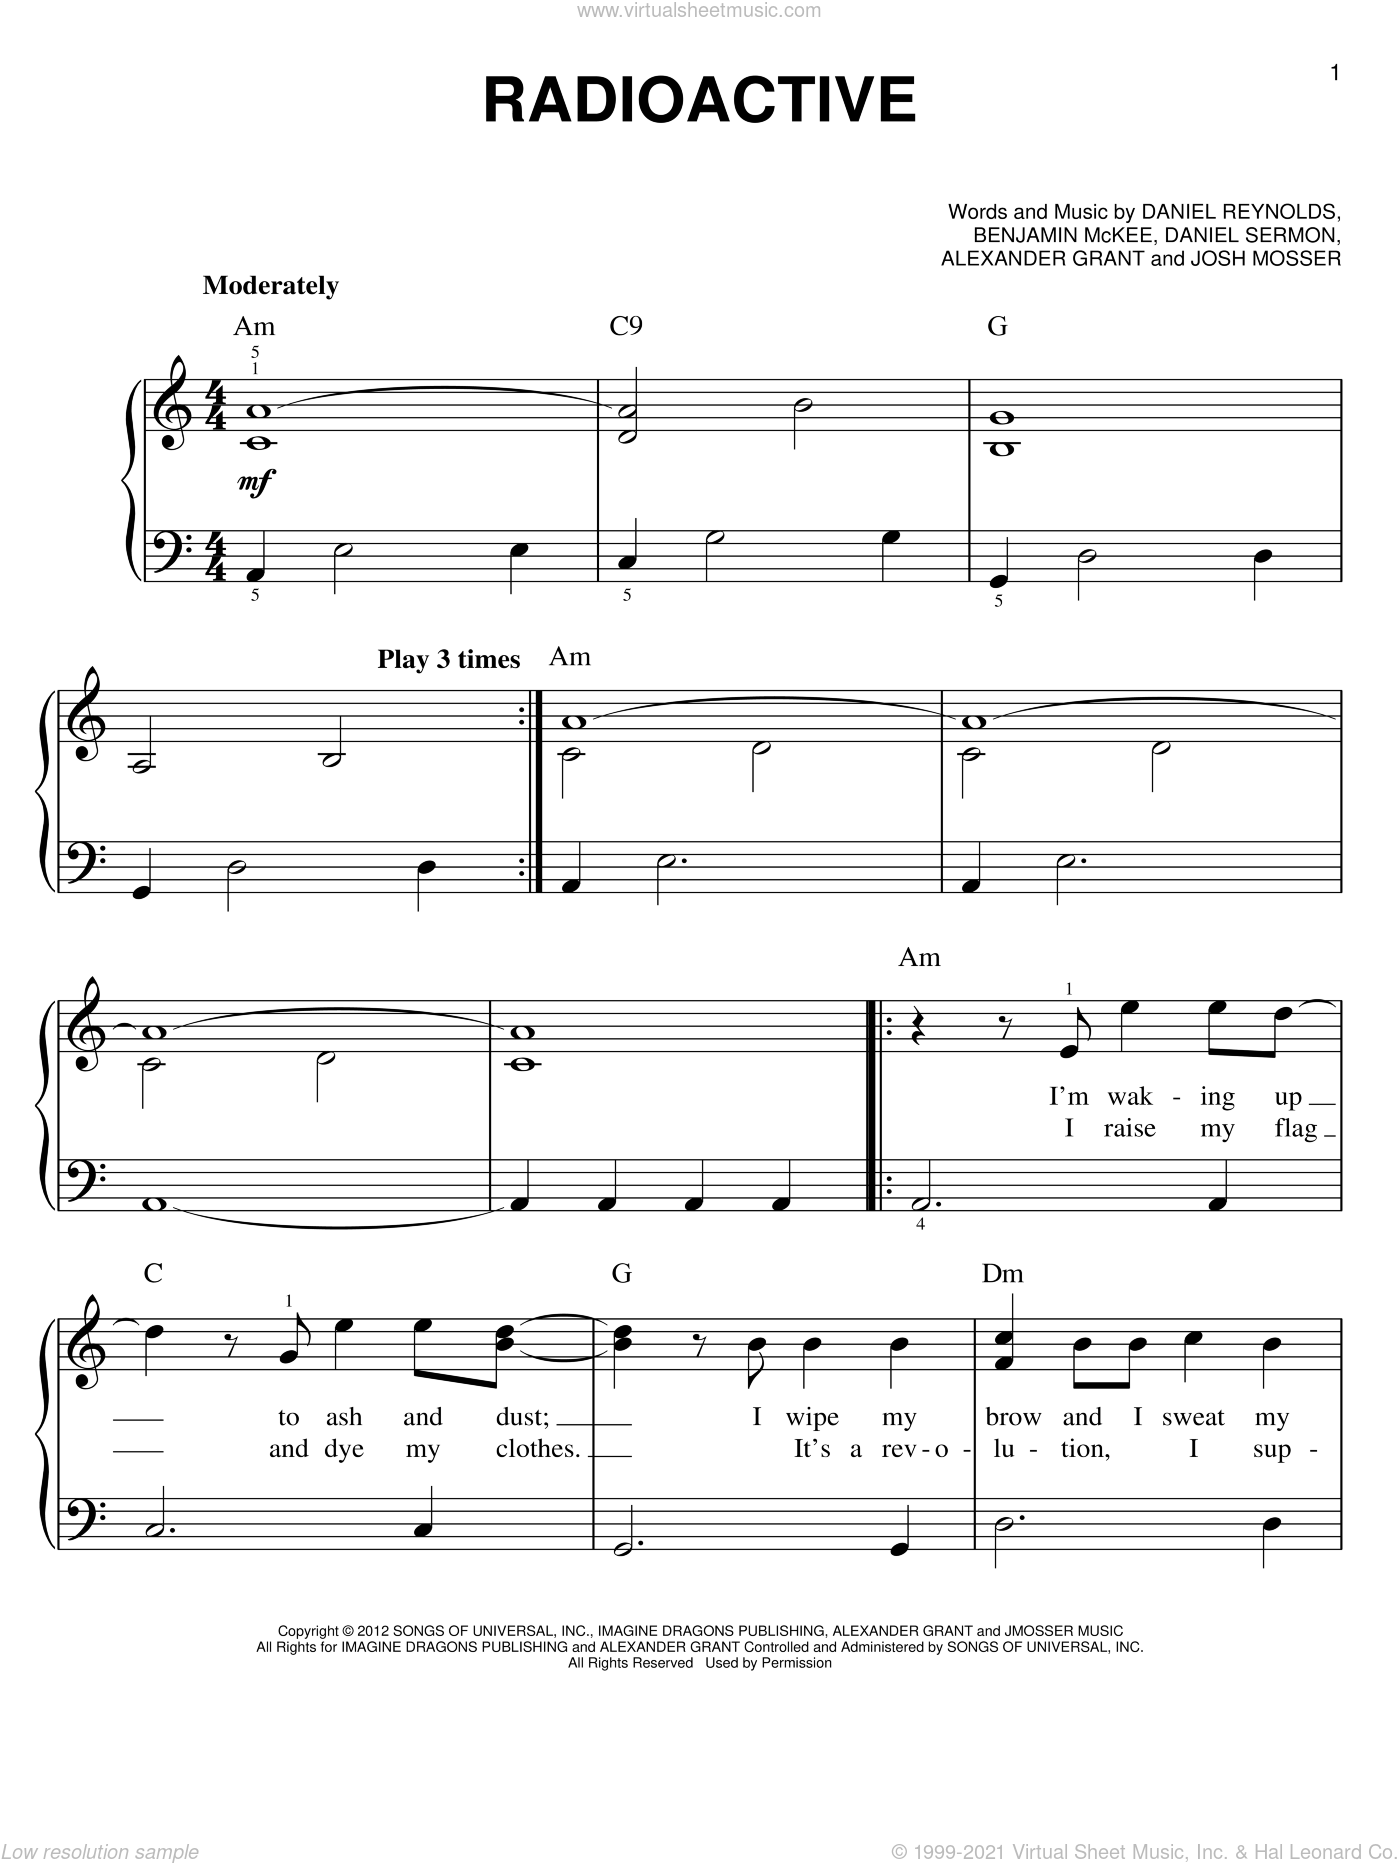 Dragons Radioactive Easy Sheet Music For Piano Solo Pdf - roblox piano songs sheet imagine dragons